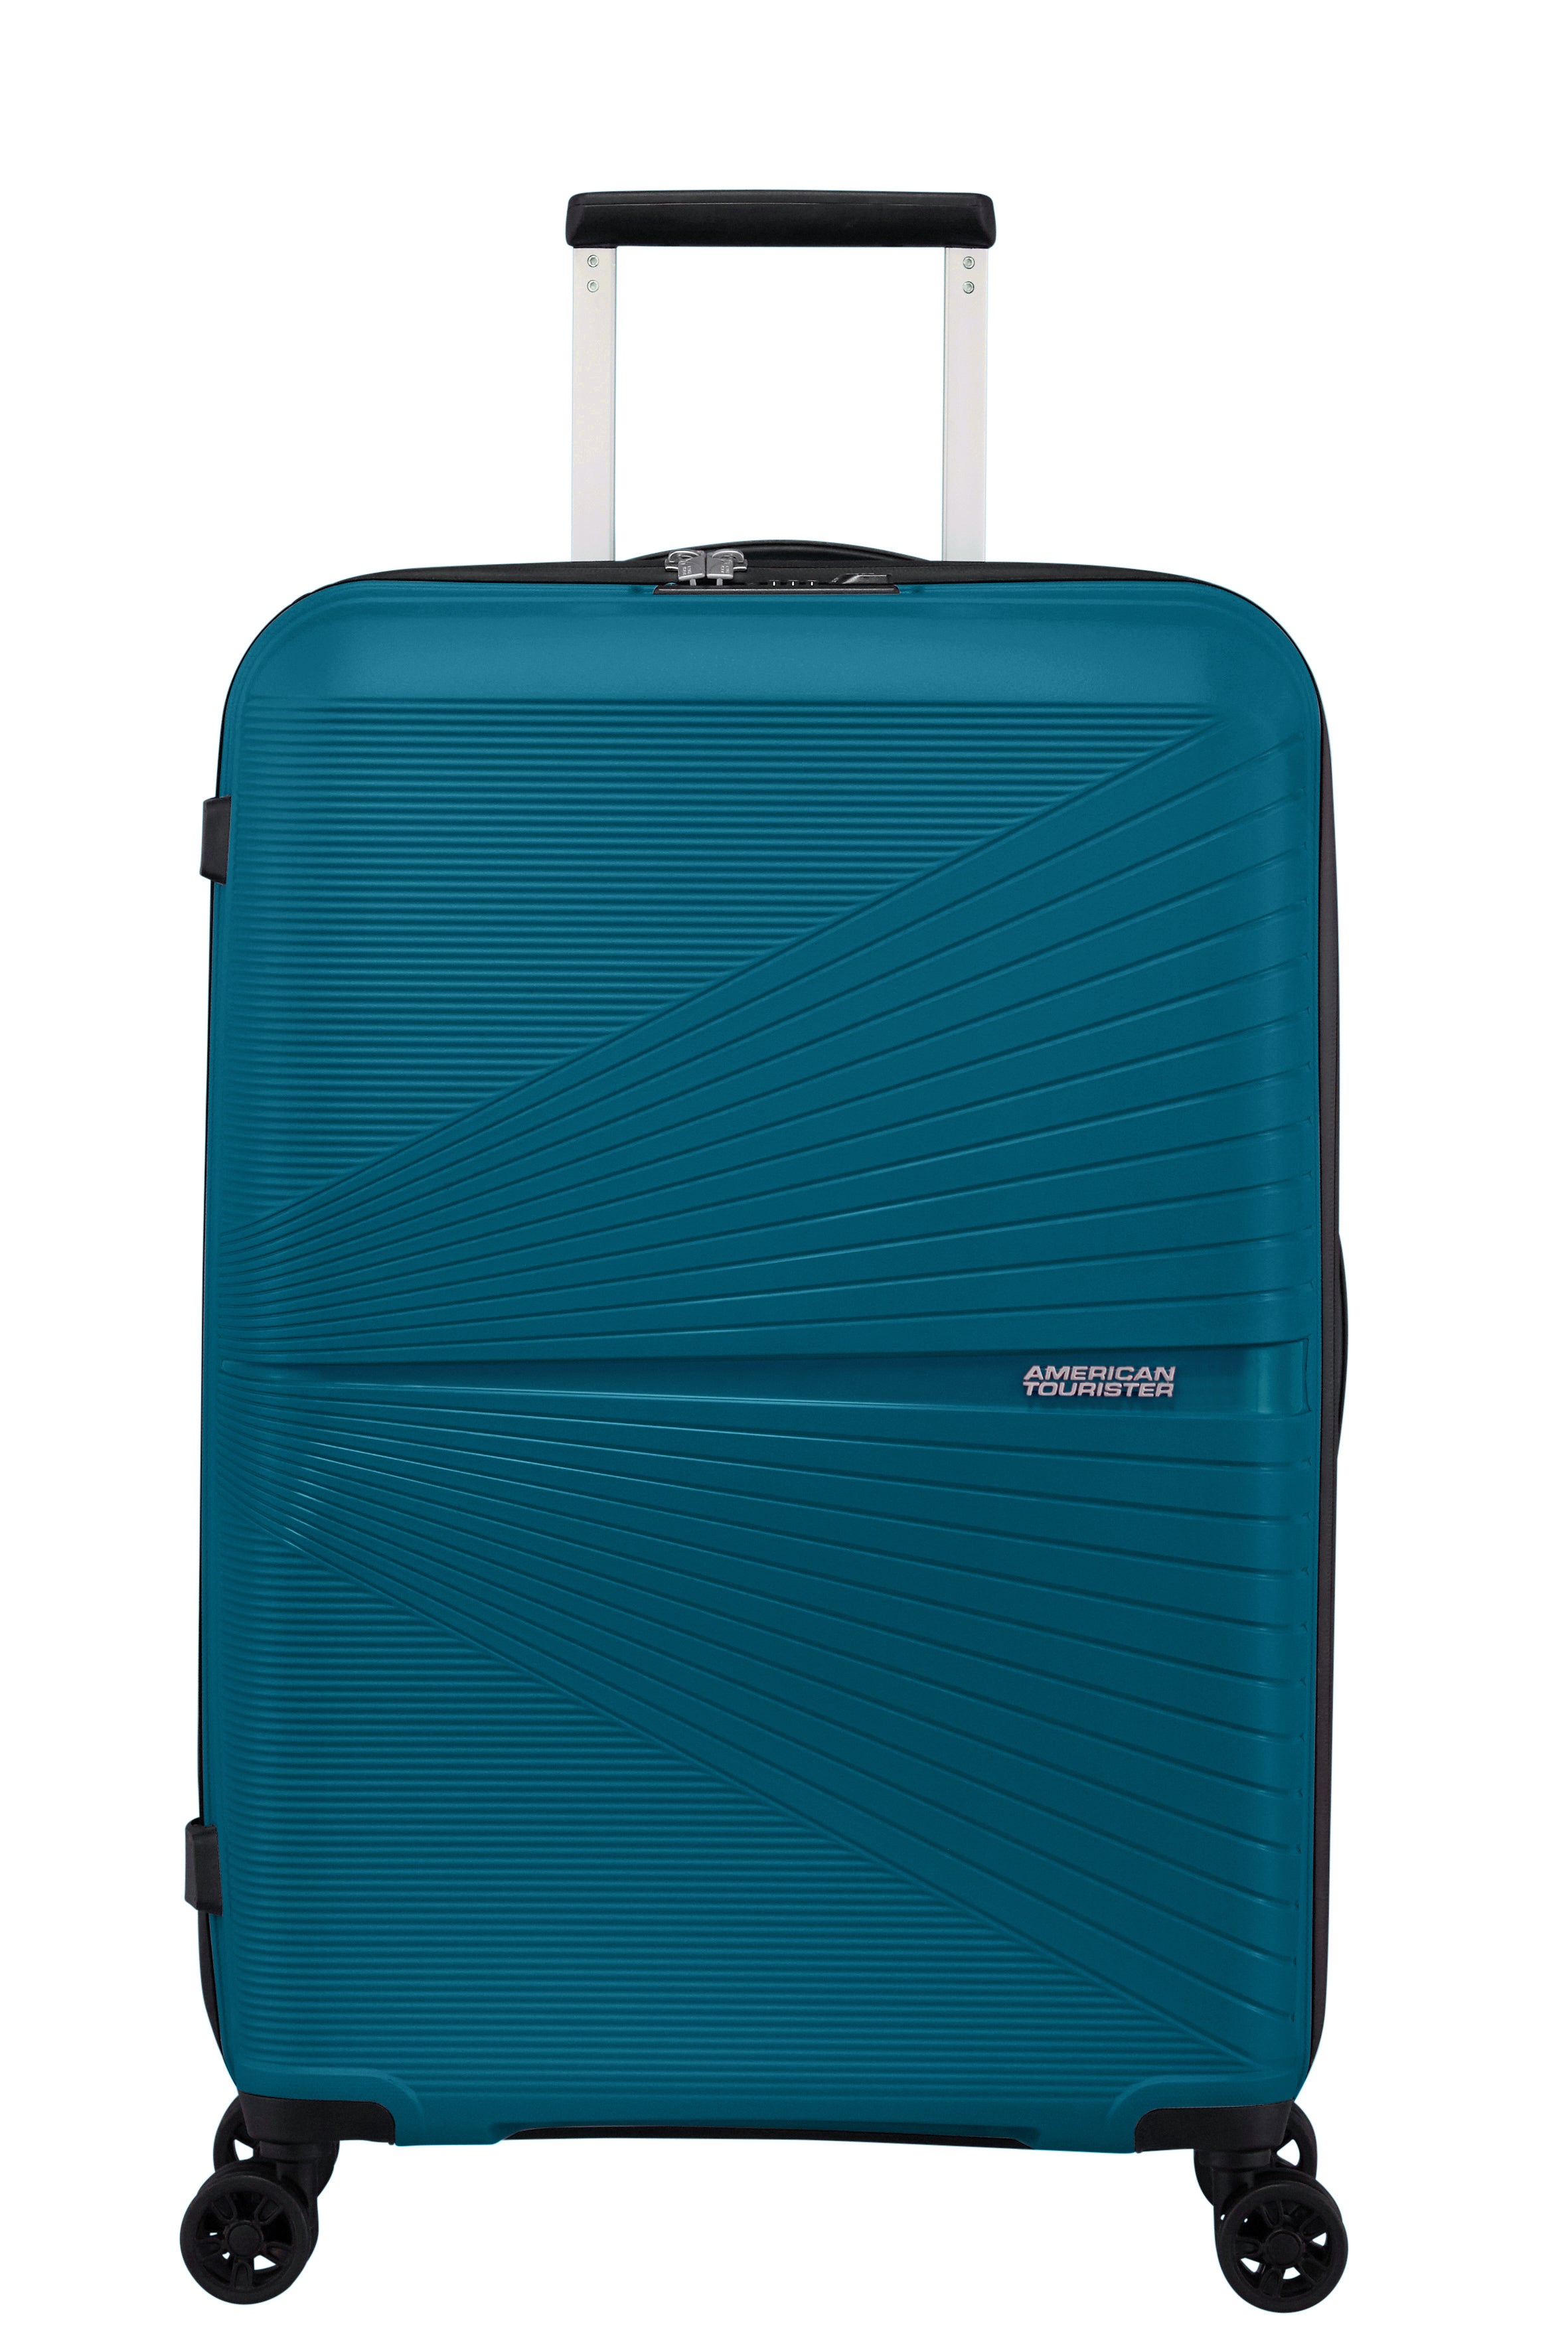 American Tourister - Airconic 67cm Medium Suitcase - Deep Ocean-2